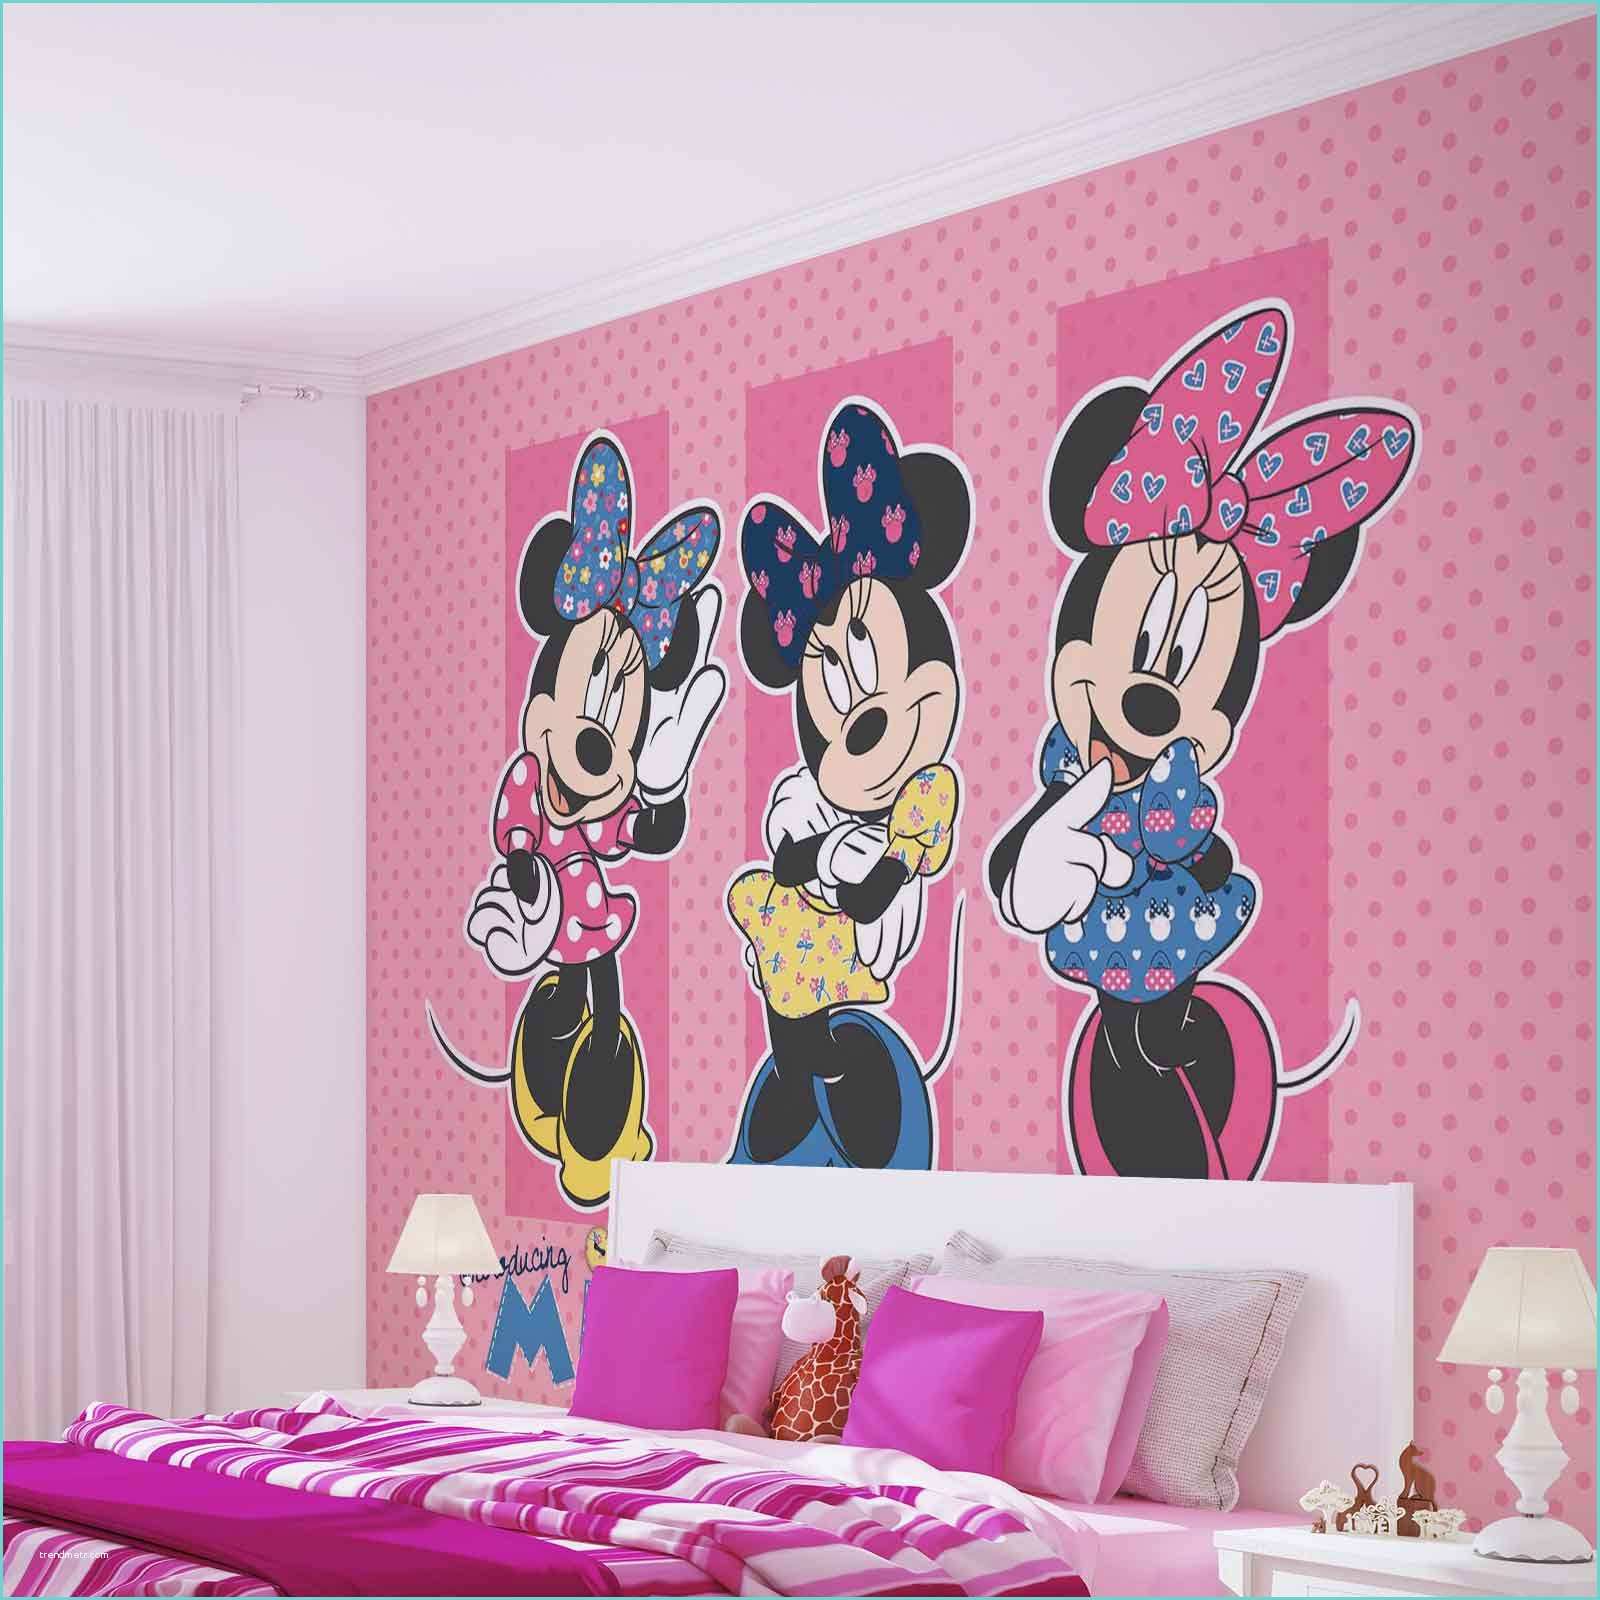 Poster Xxl Disney Wall Mural Disney Minnie Mouse Xxl Photo Wallpaper 1677dc